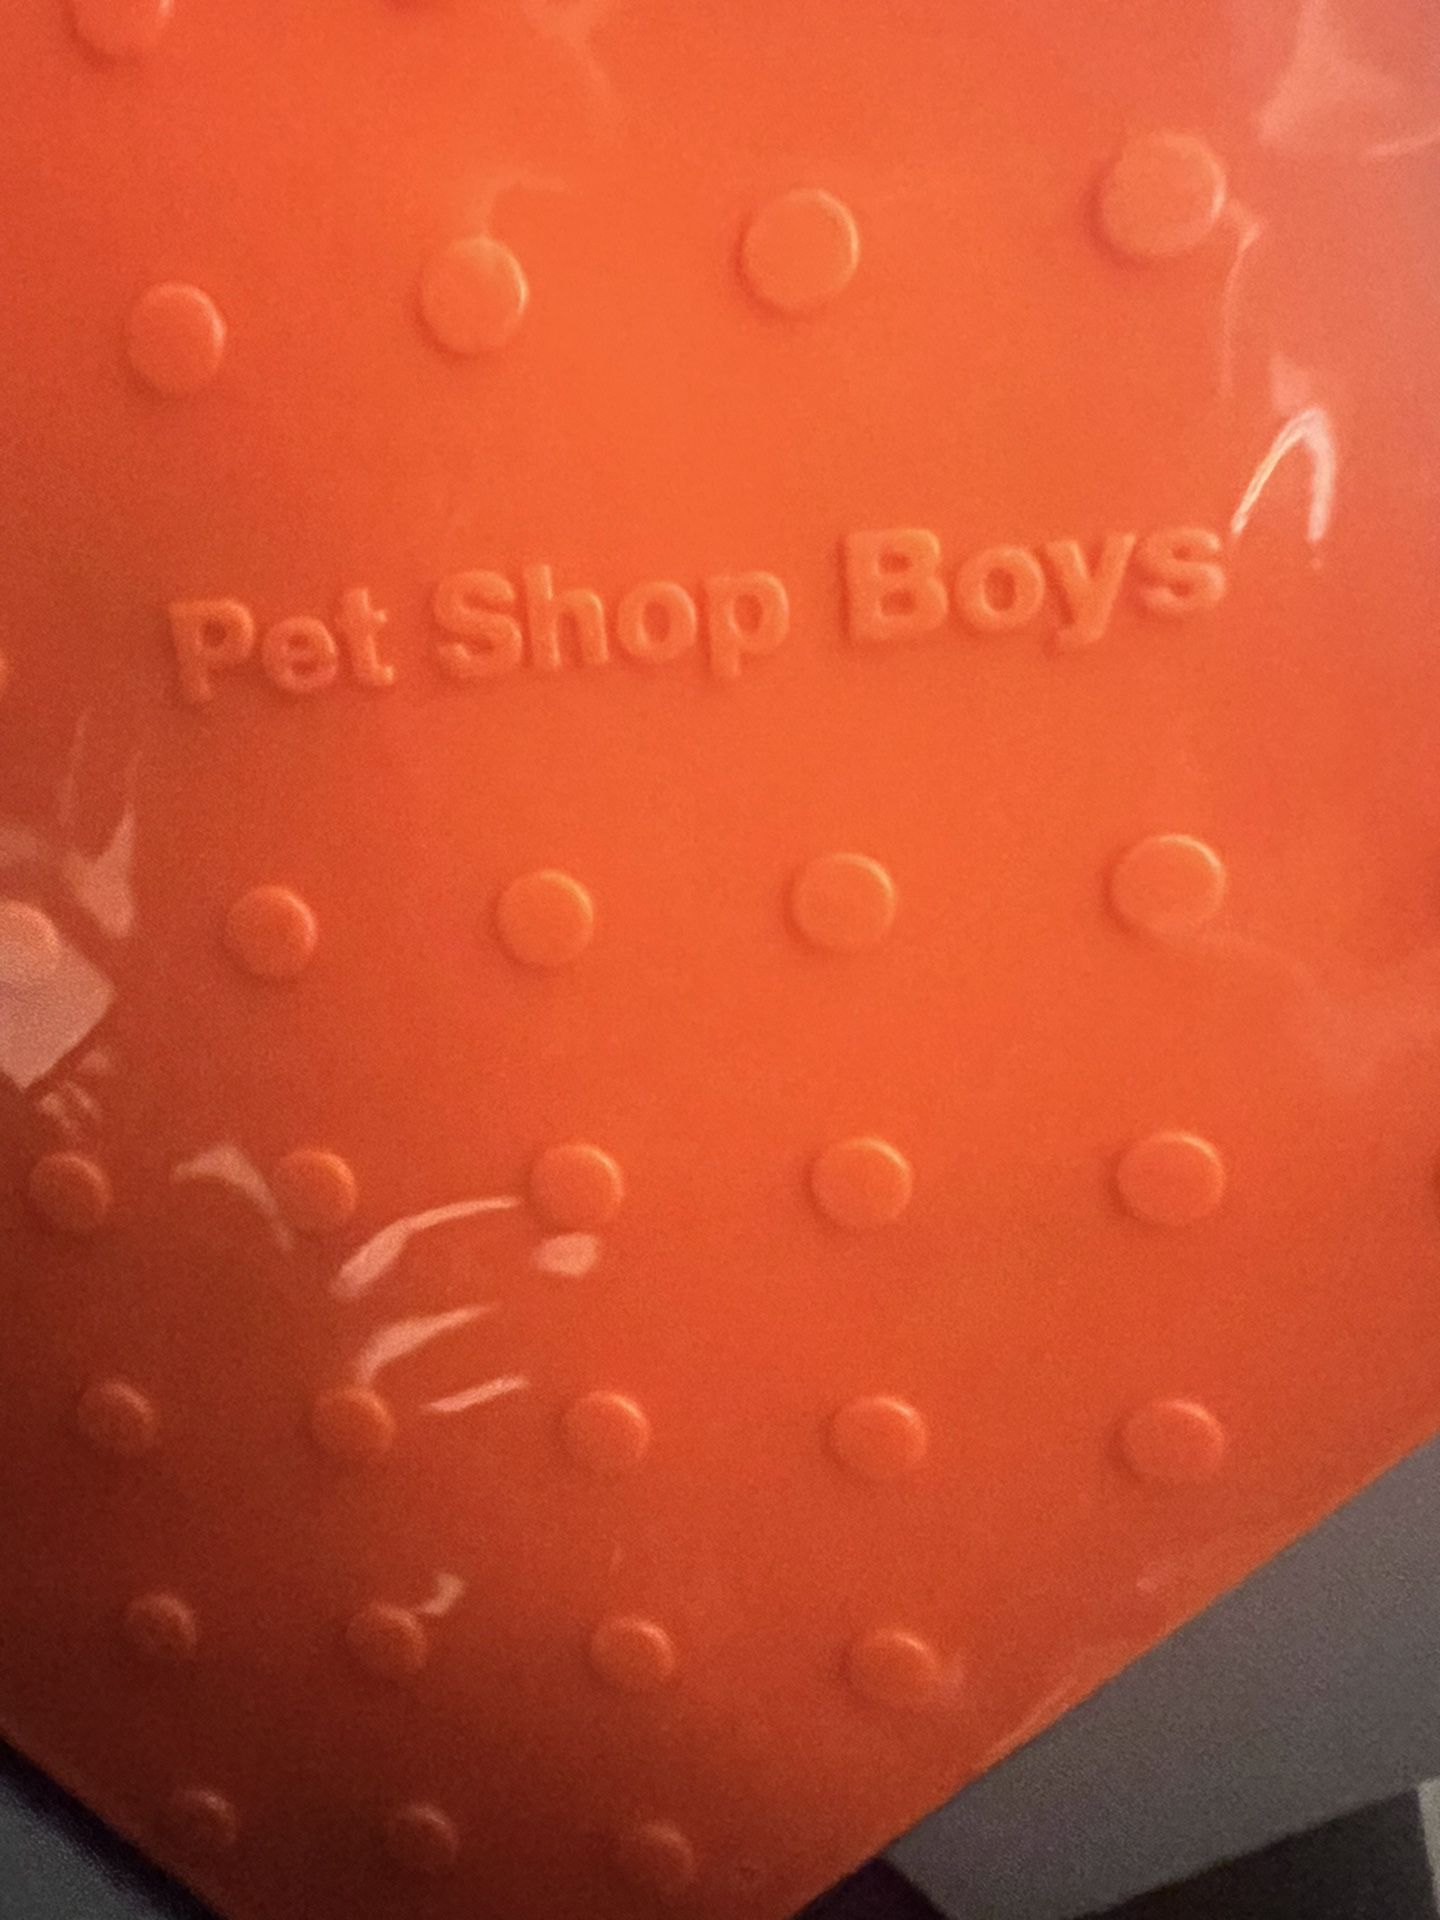 Brand New Sealed Very Pet Shop Boys Audio CD